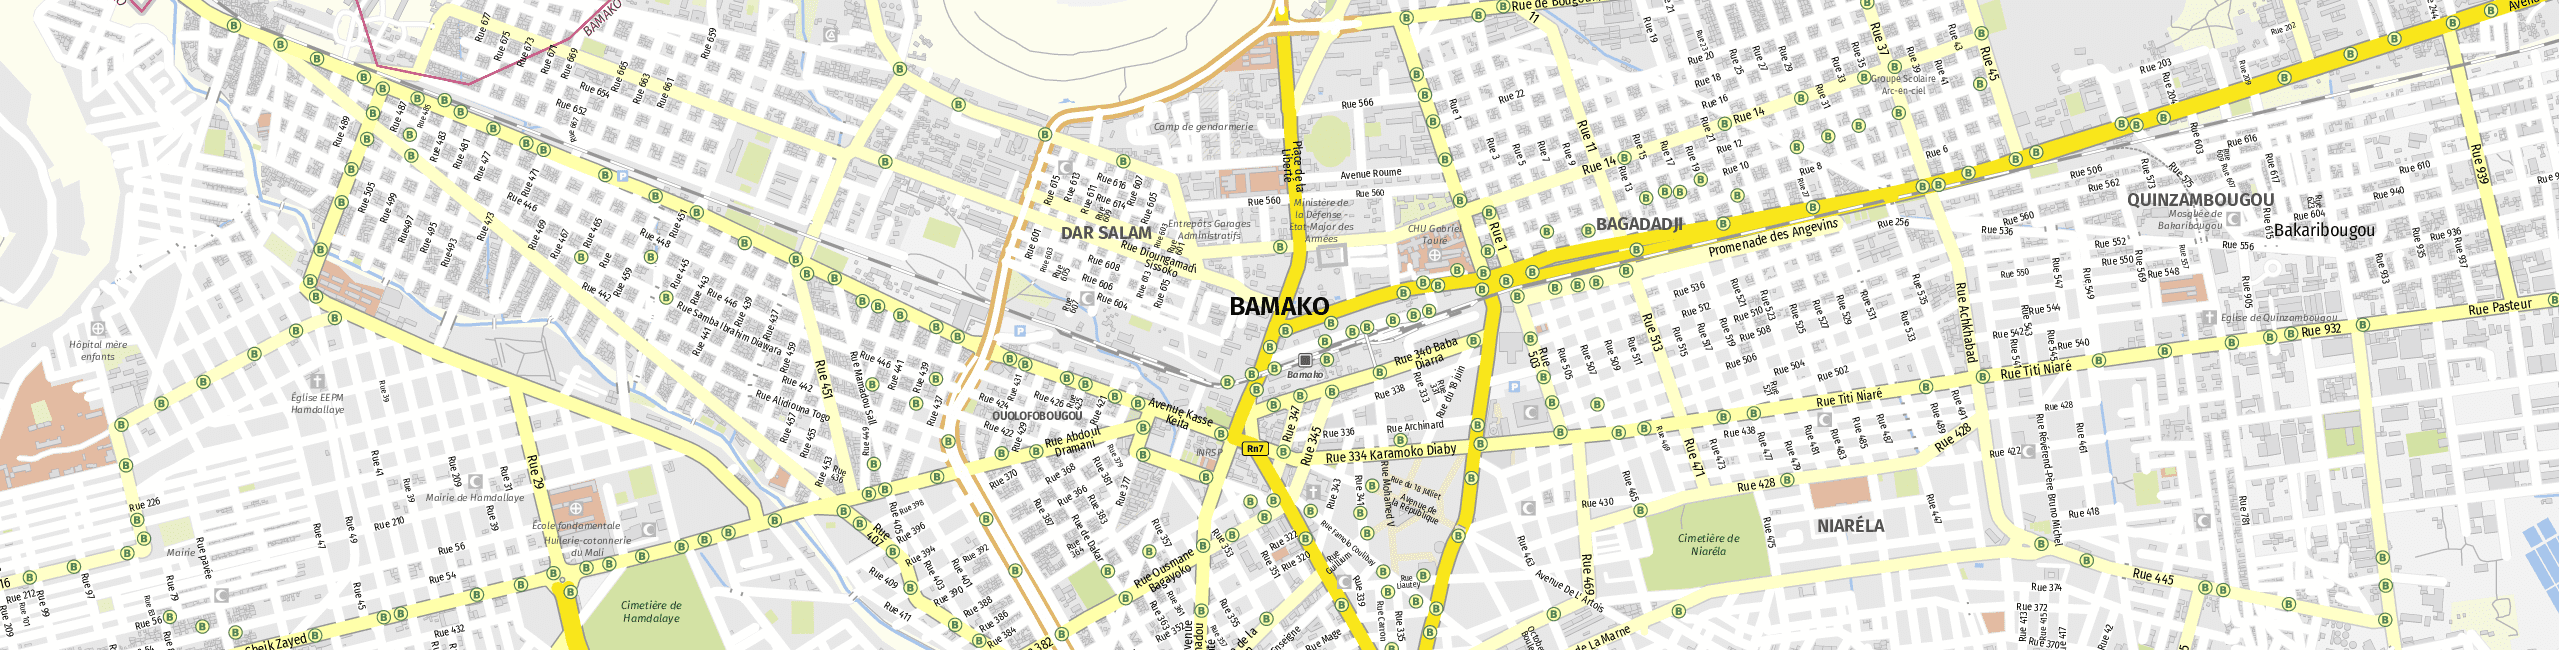 Stadtplan Bamako zum Downloaden.